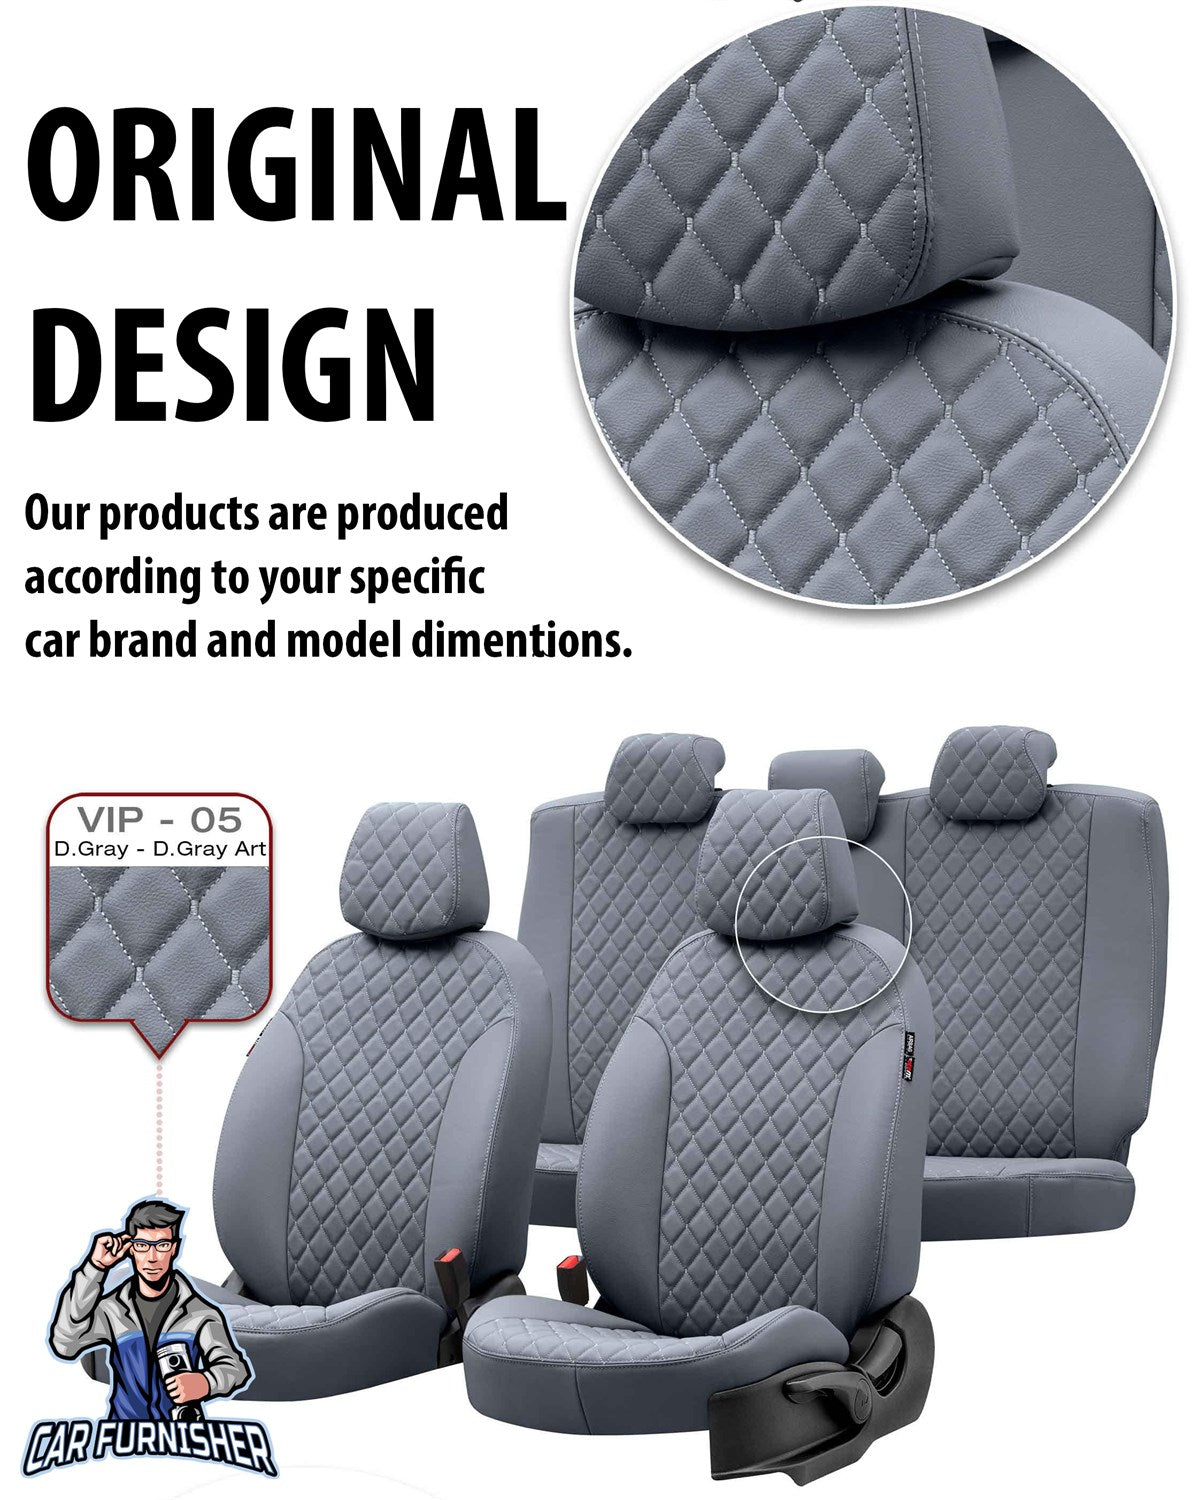 Seat Cordoba Seat Covers Madrid Leather Design Dark Gray Leather